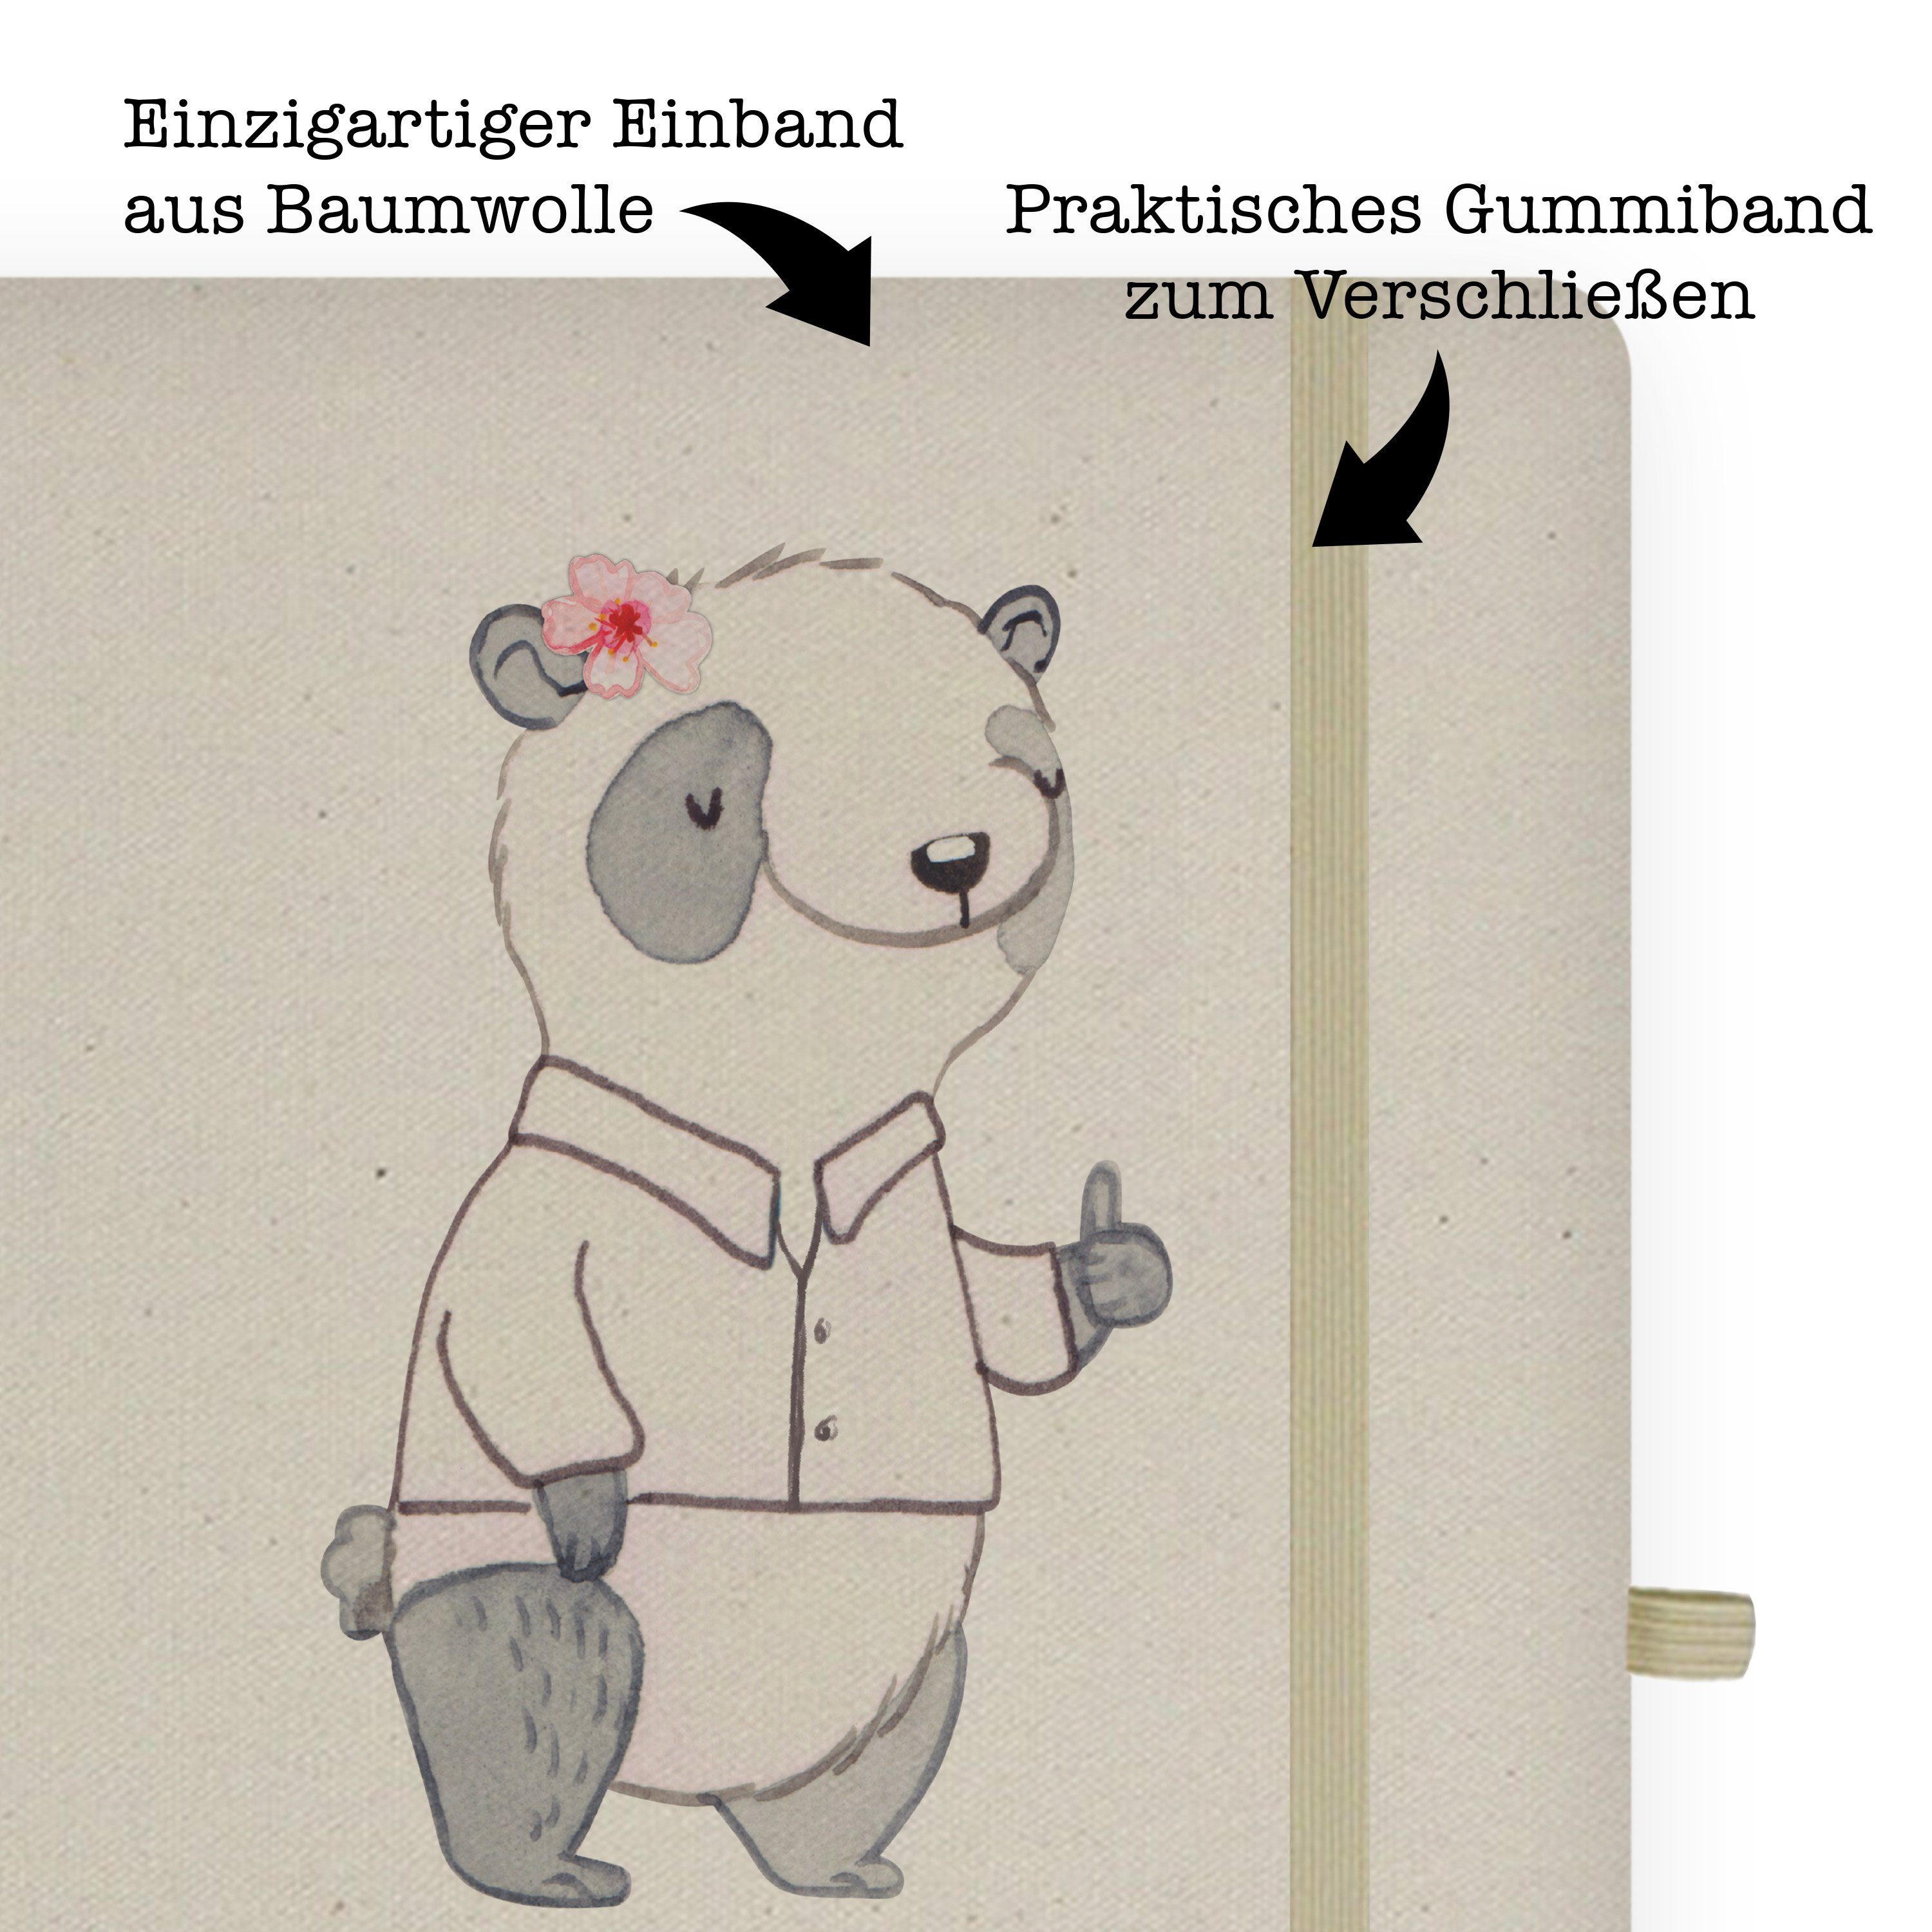 Adressbuch, Mr. & Intercultural Manager & Panda Geschenk, Transparent Mr. Mrs. mit Herz Mrs. - Panda - Notizbuch